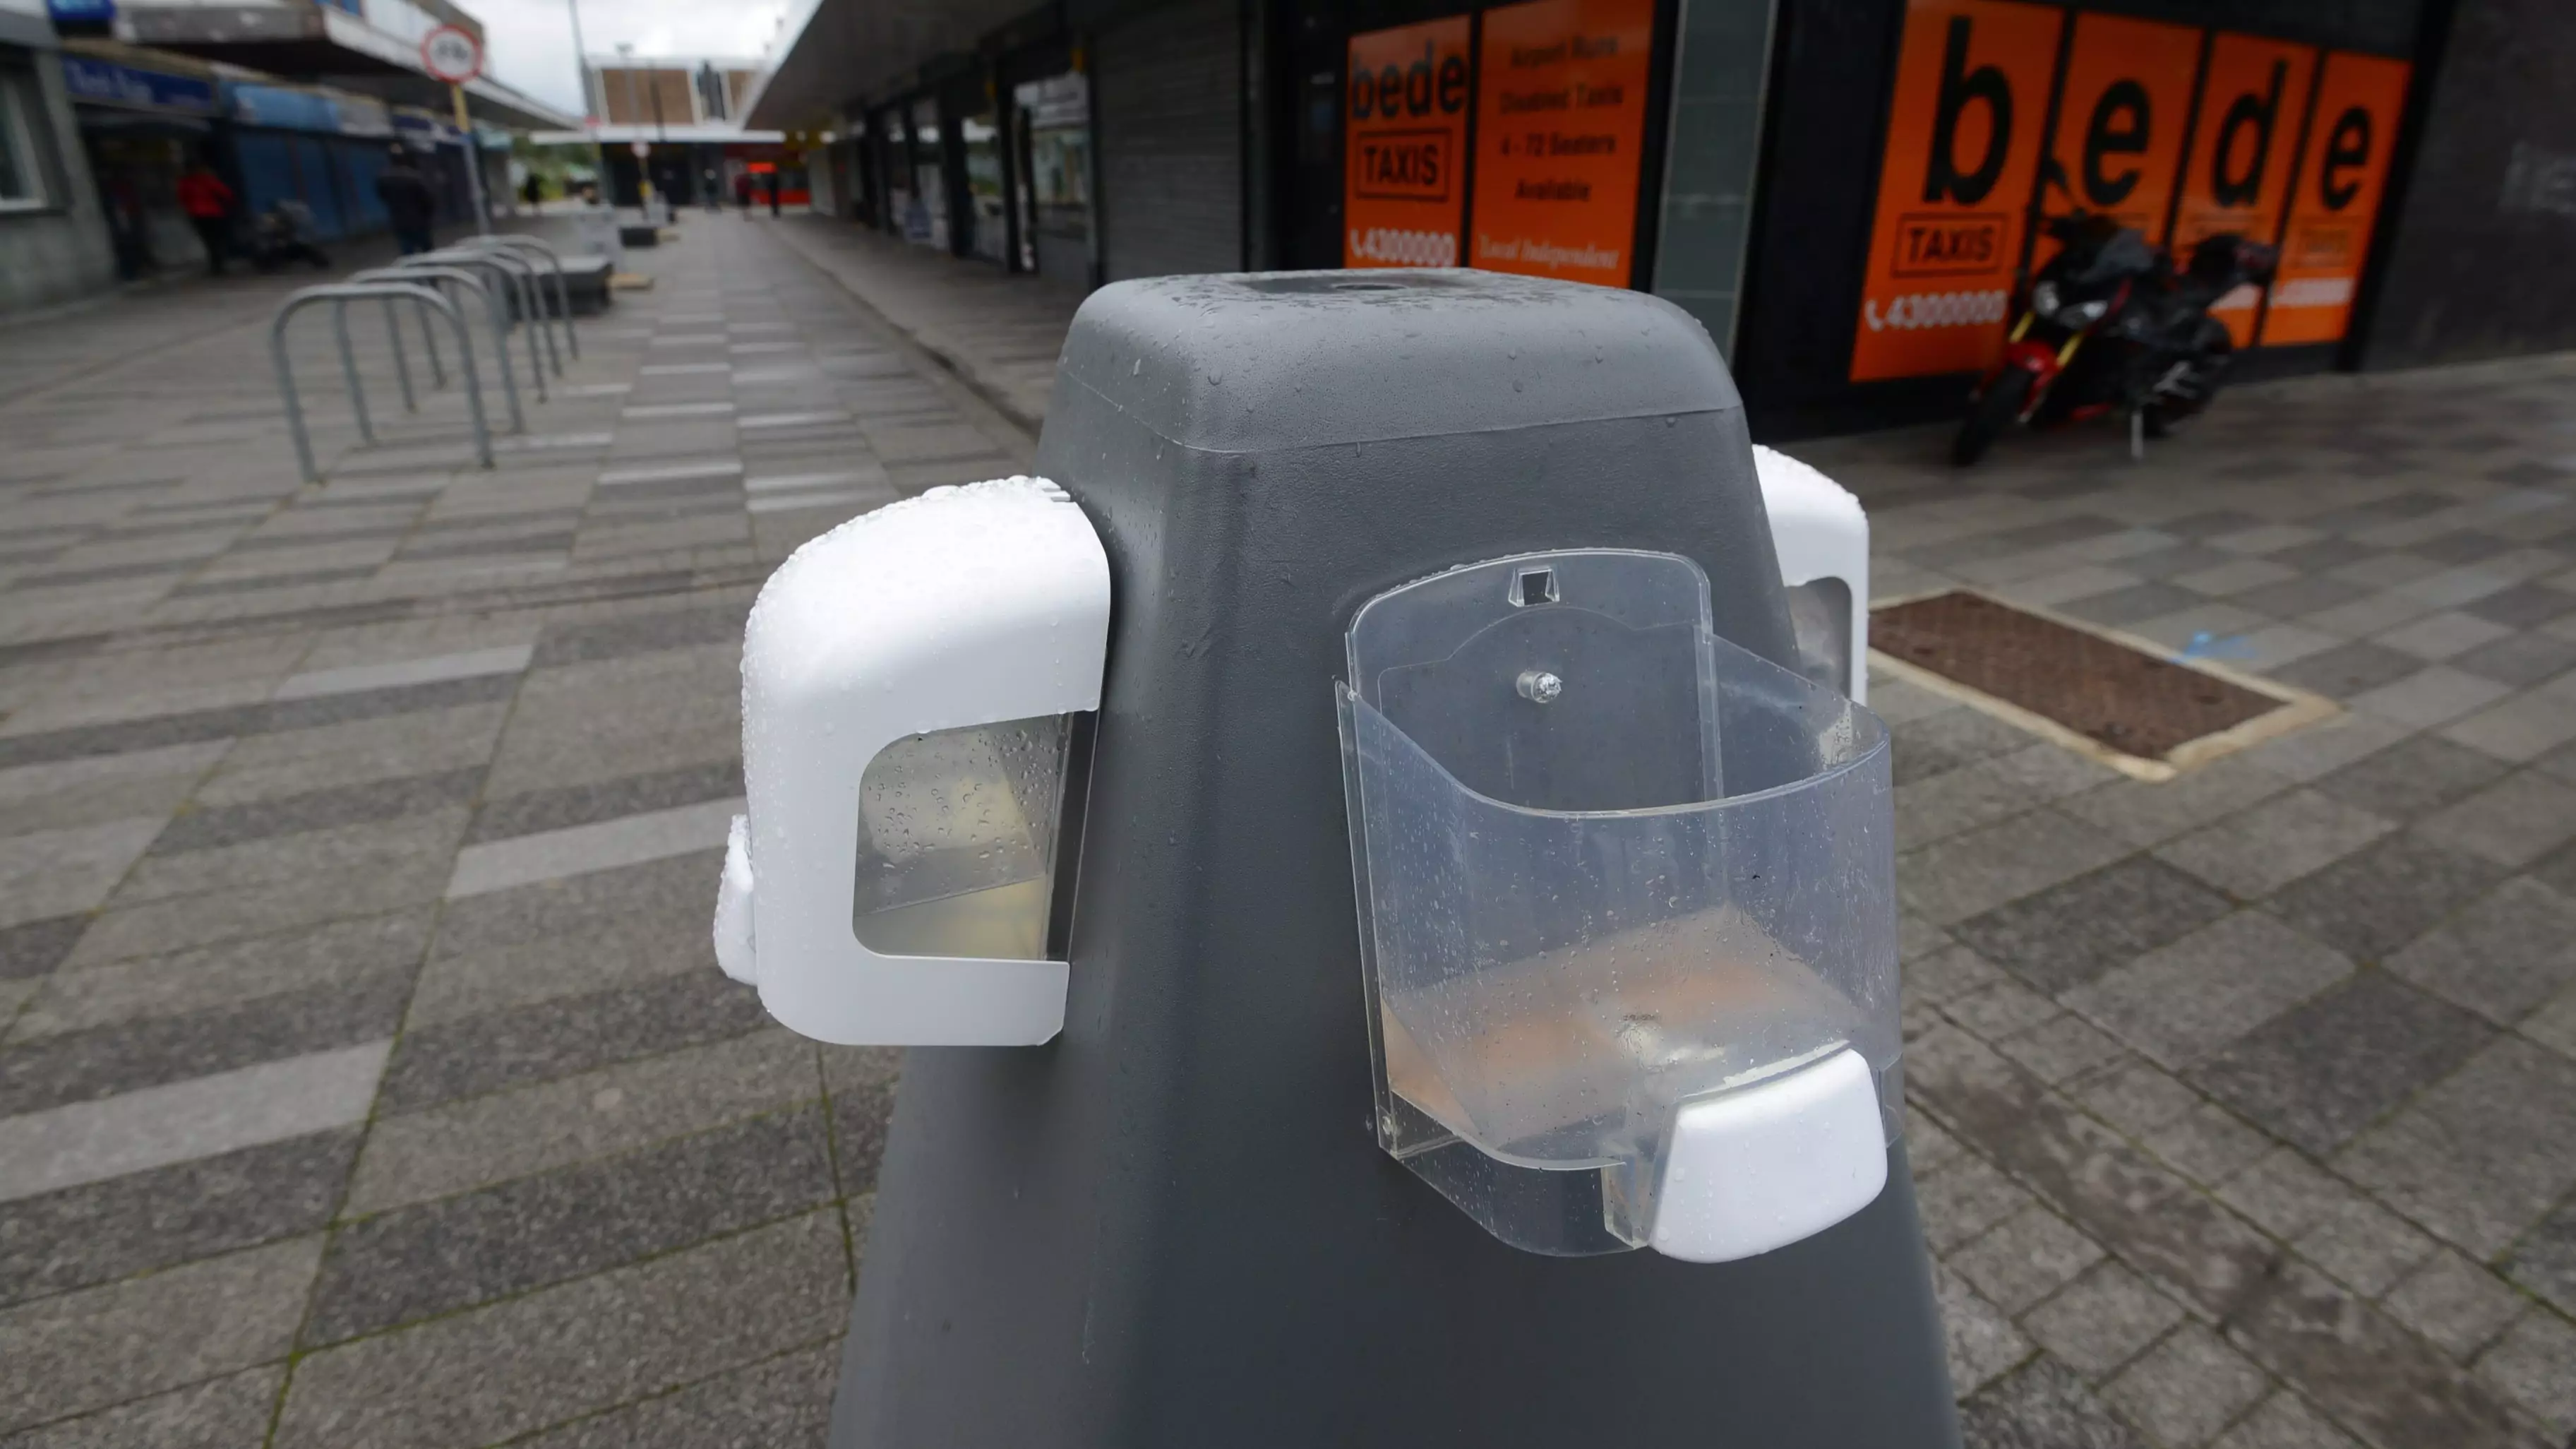 Vandals Smashing Up Hand Sanitiser Dispensers To 'Drink Alcohol Inside'